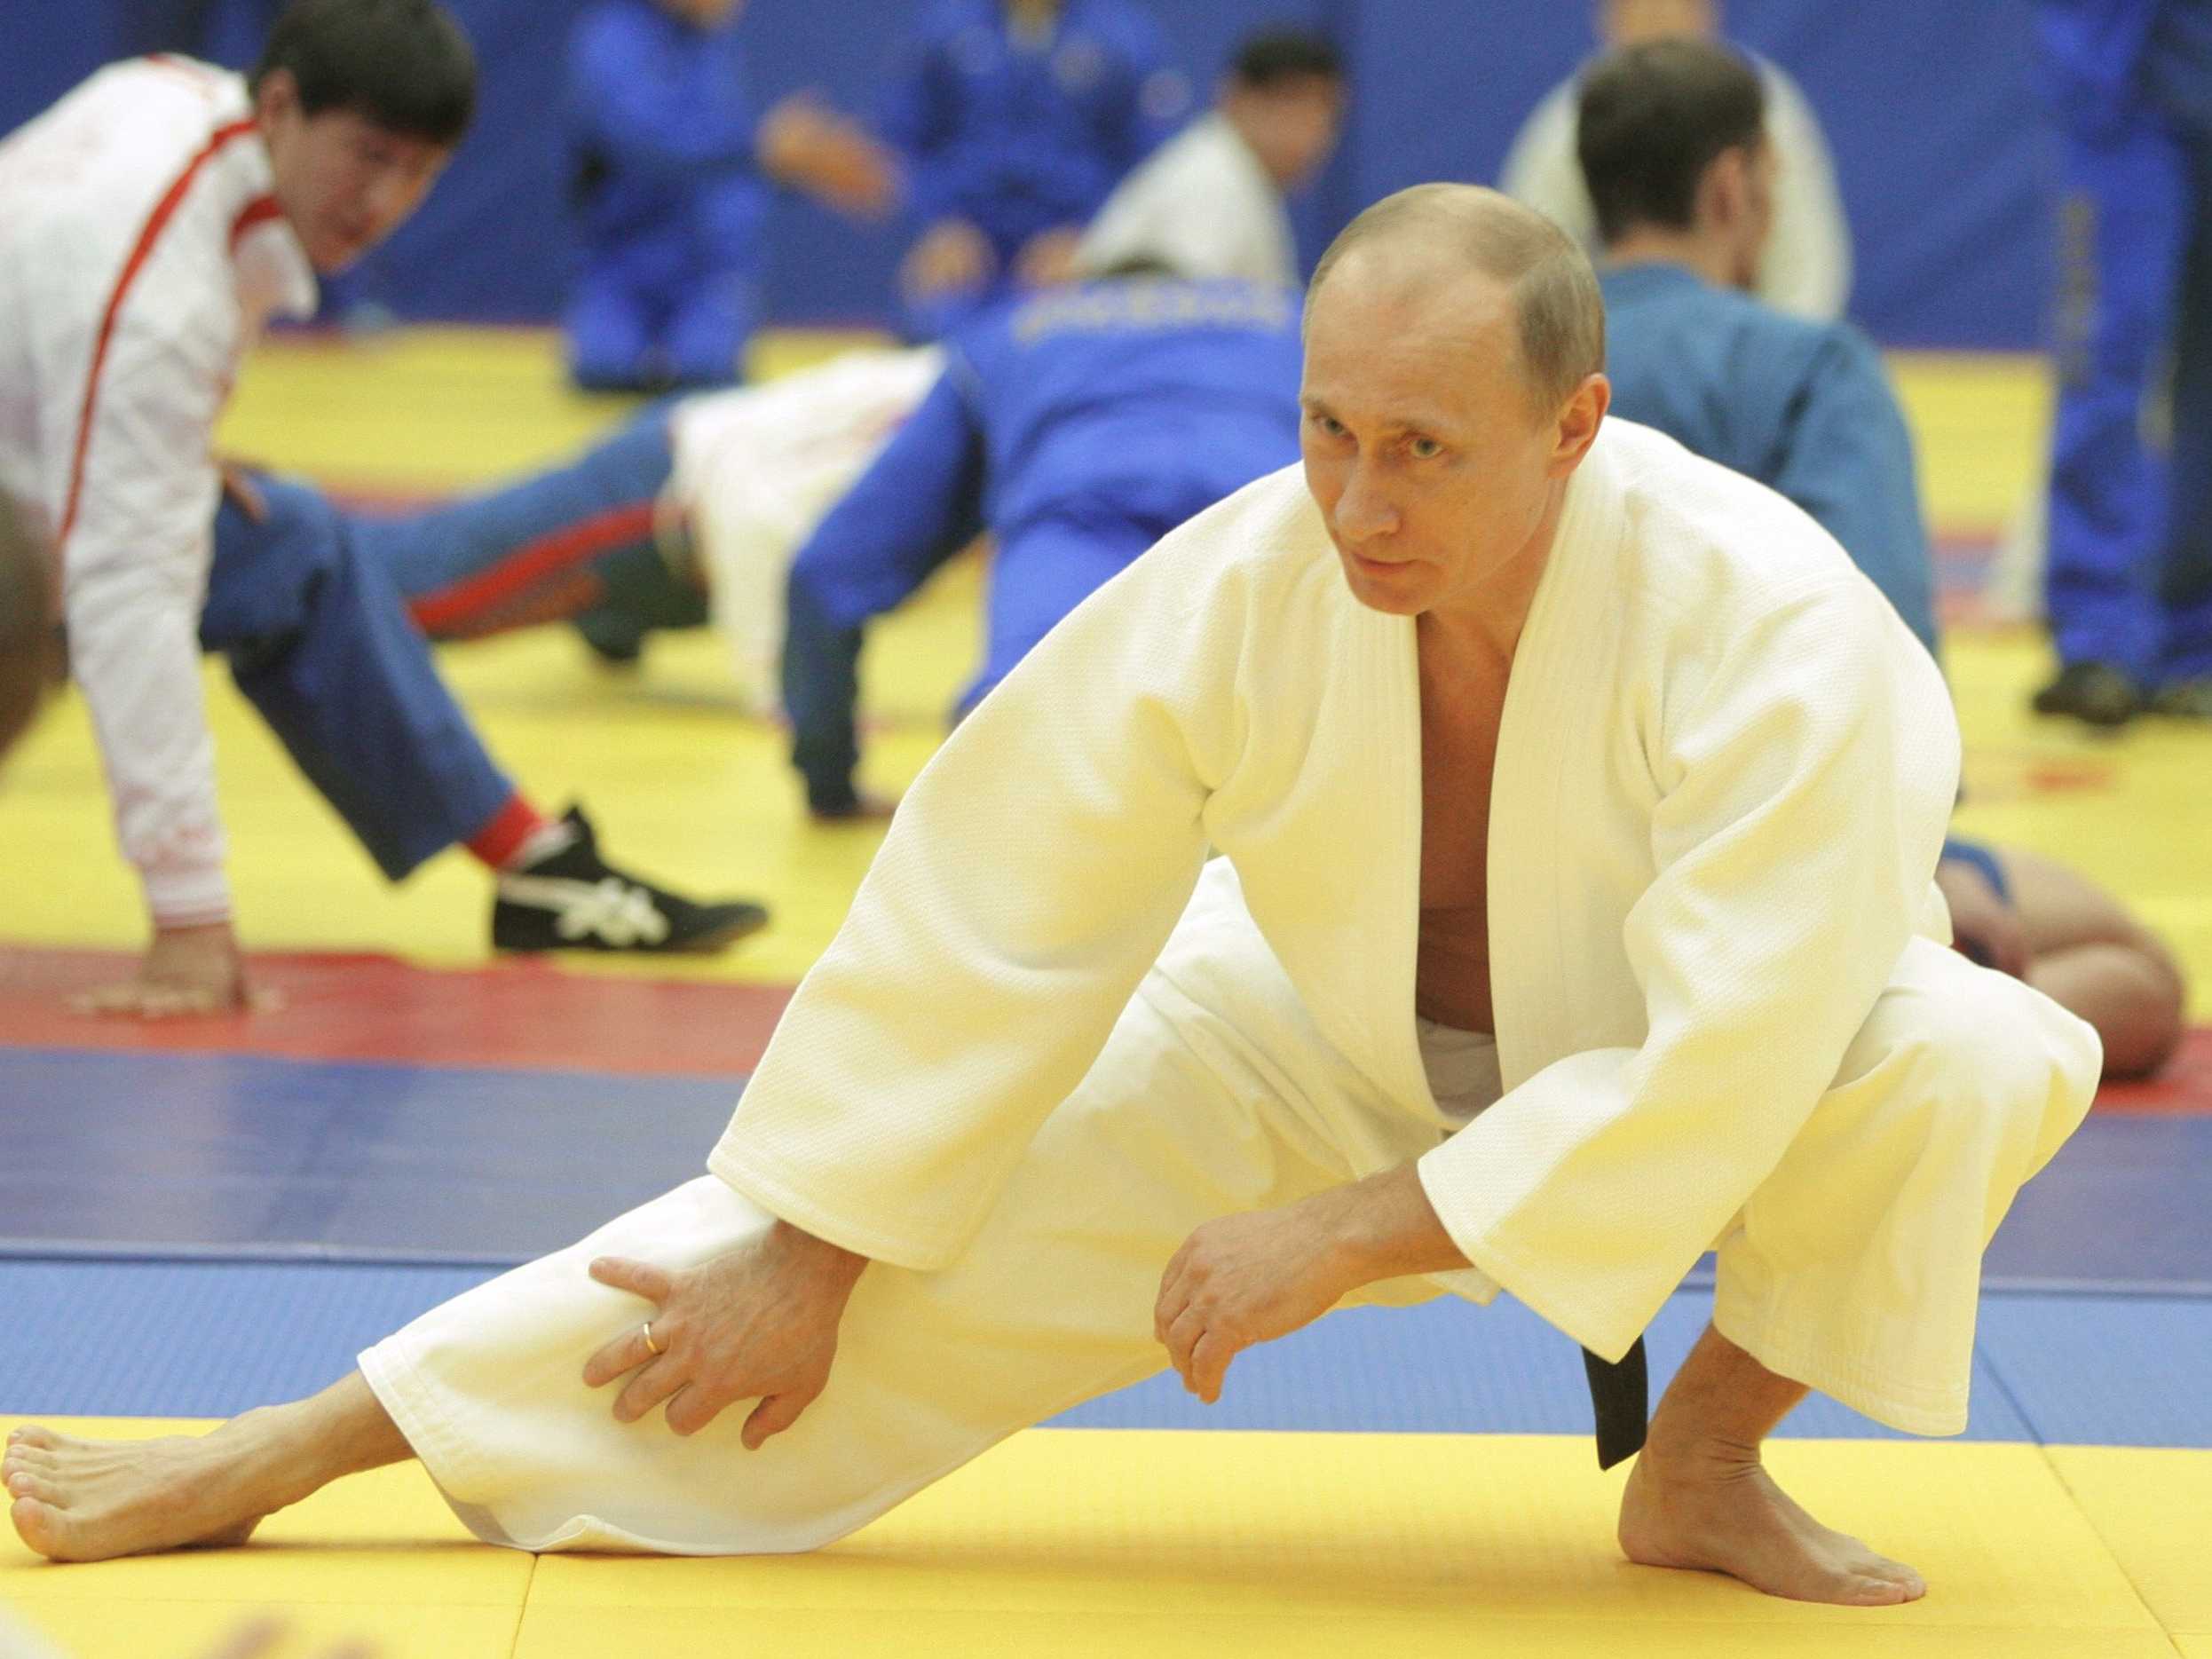 Judo Chop! Putin spars with Russian team in Sochi (VIDEO)